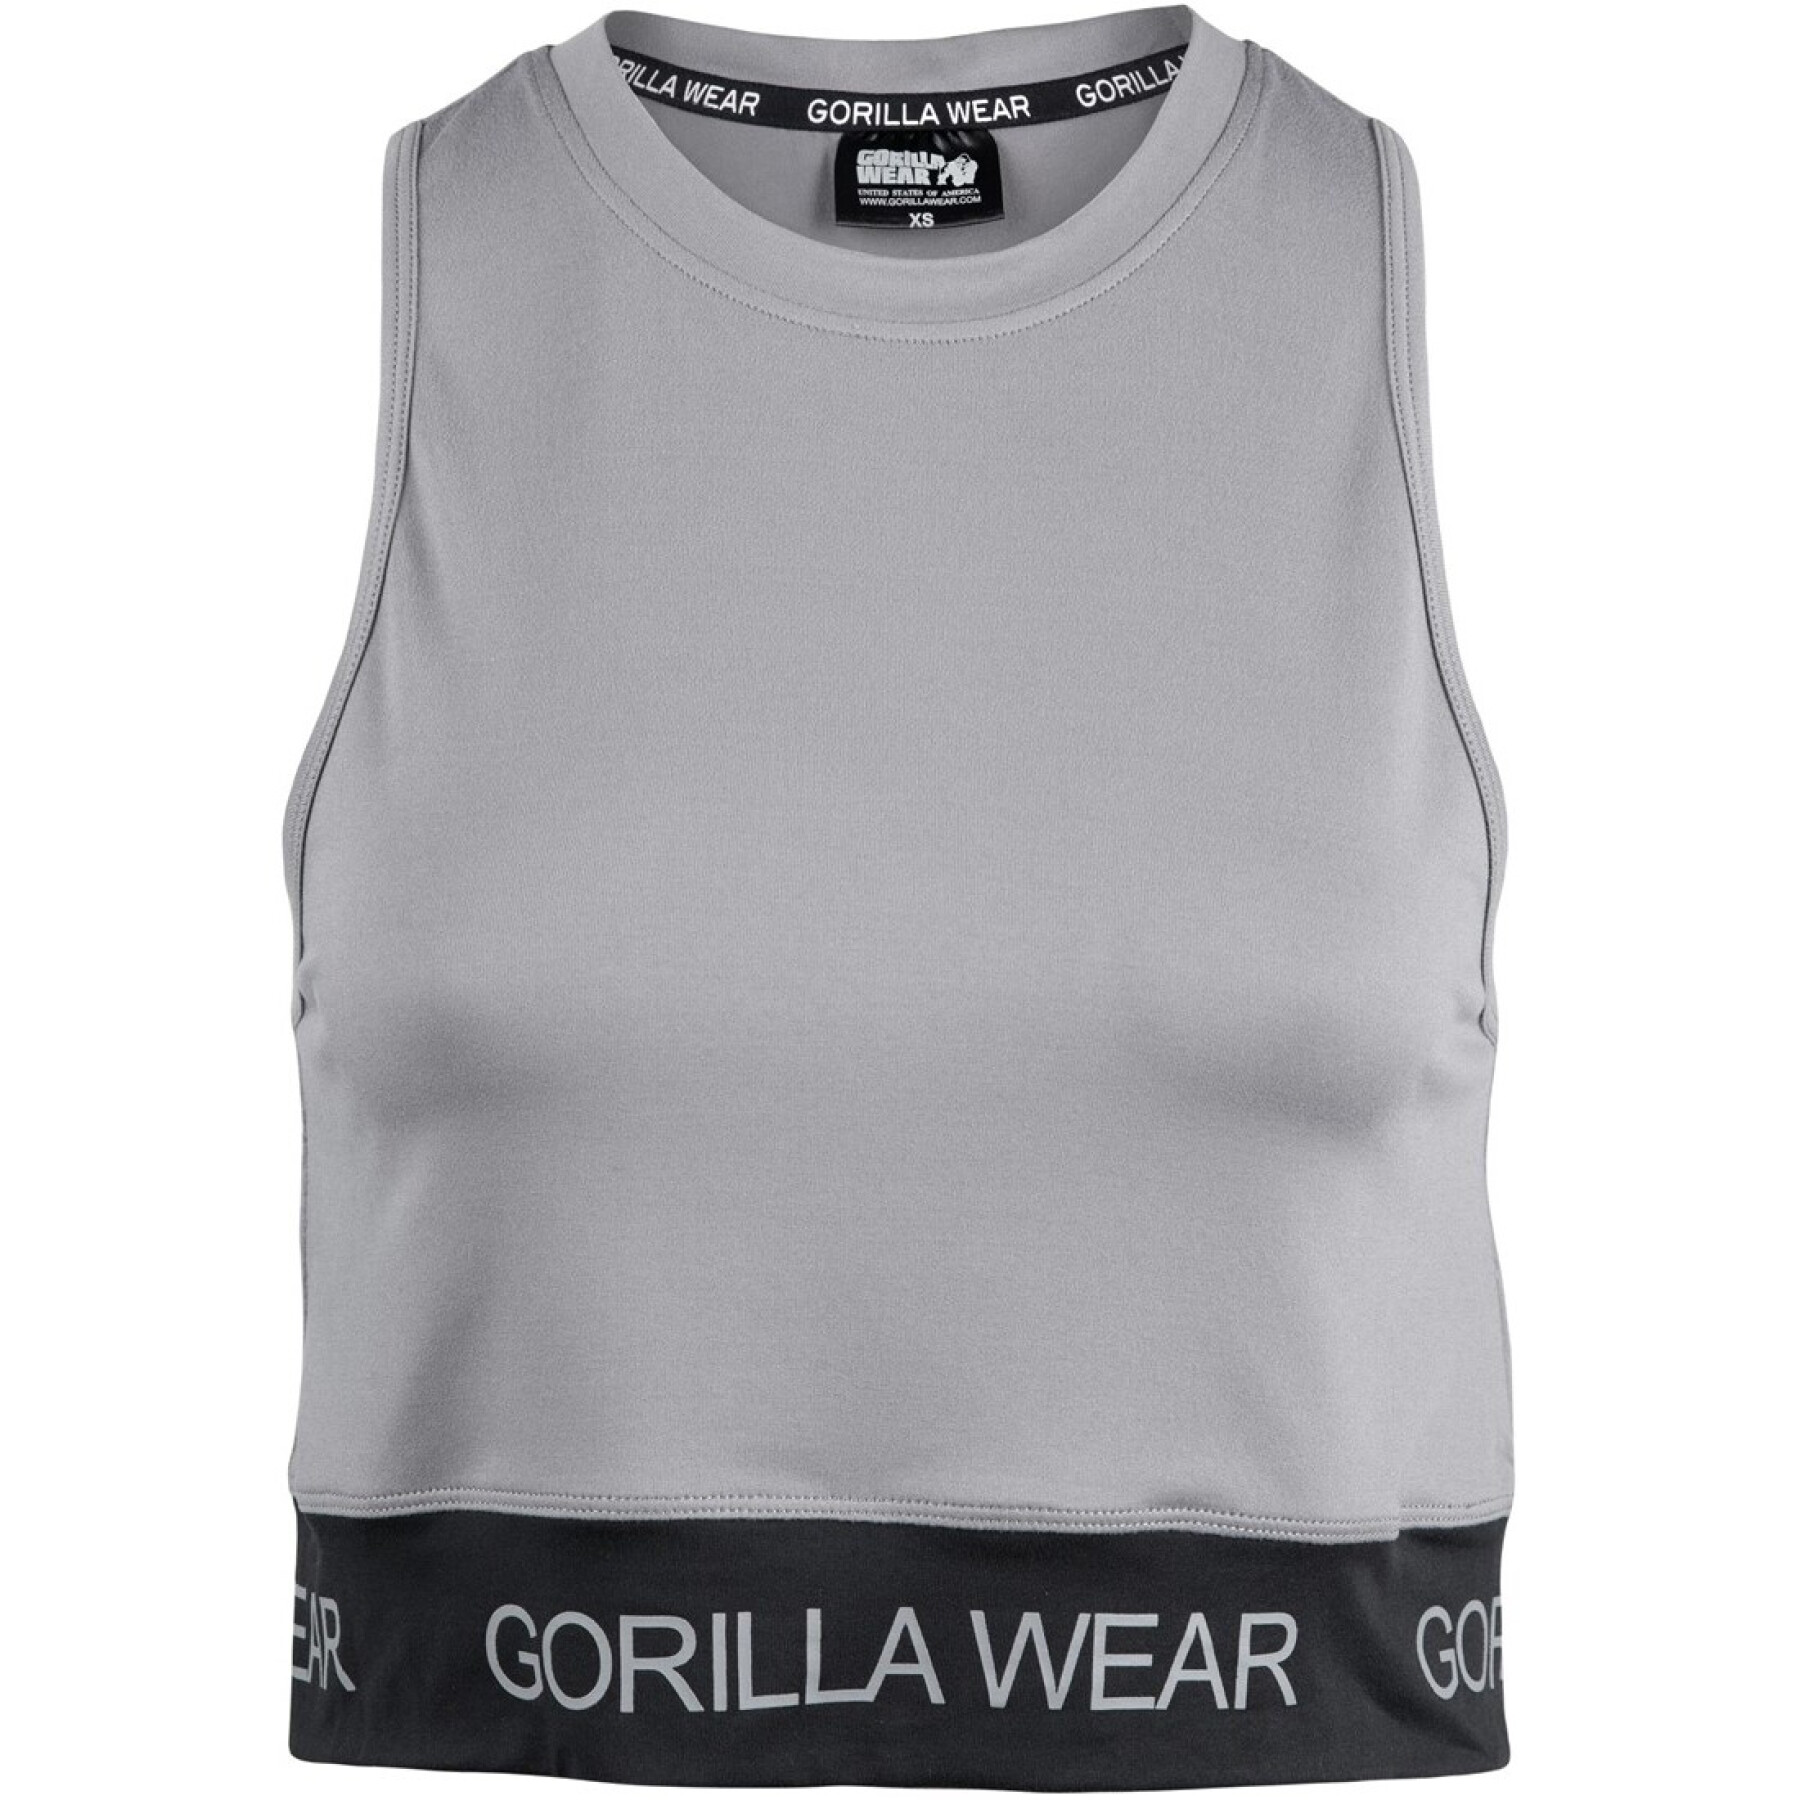 Women's crop top Gorilla Wear Colby